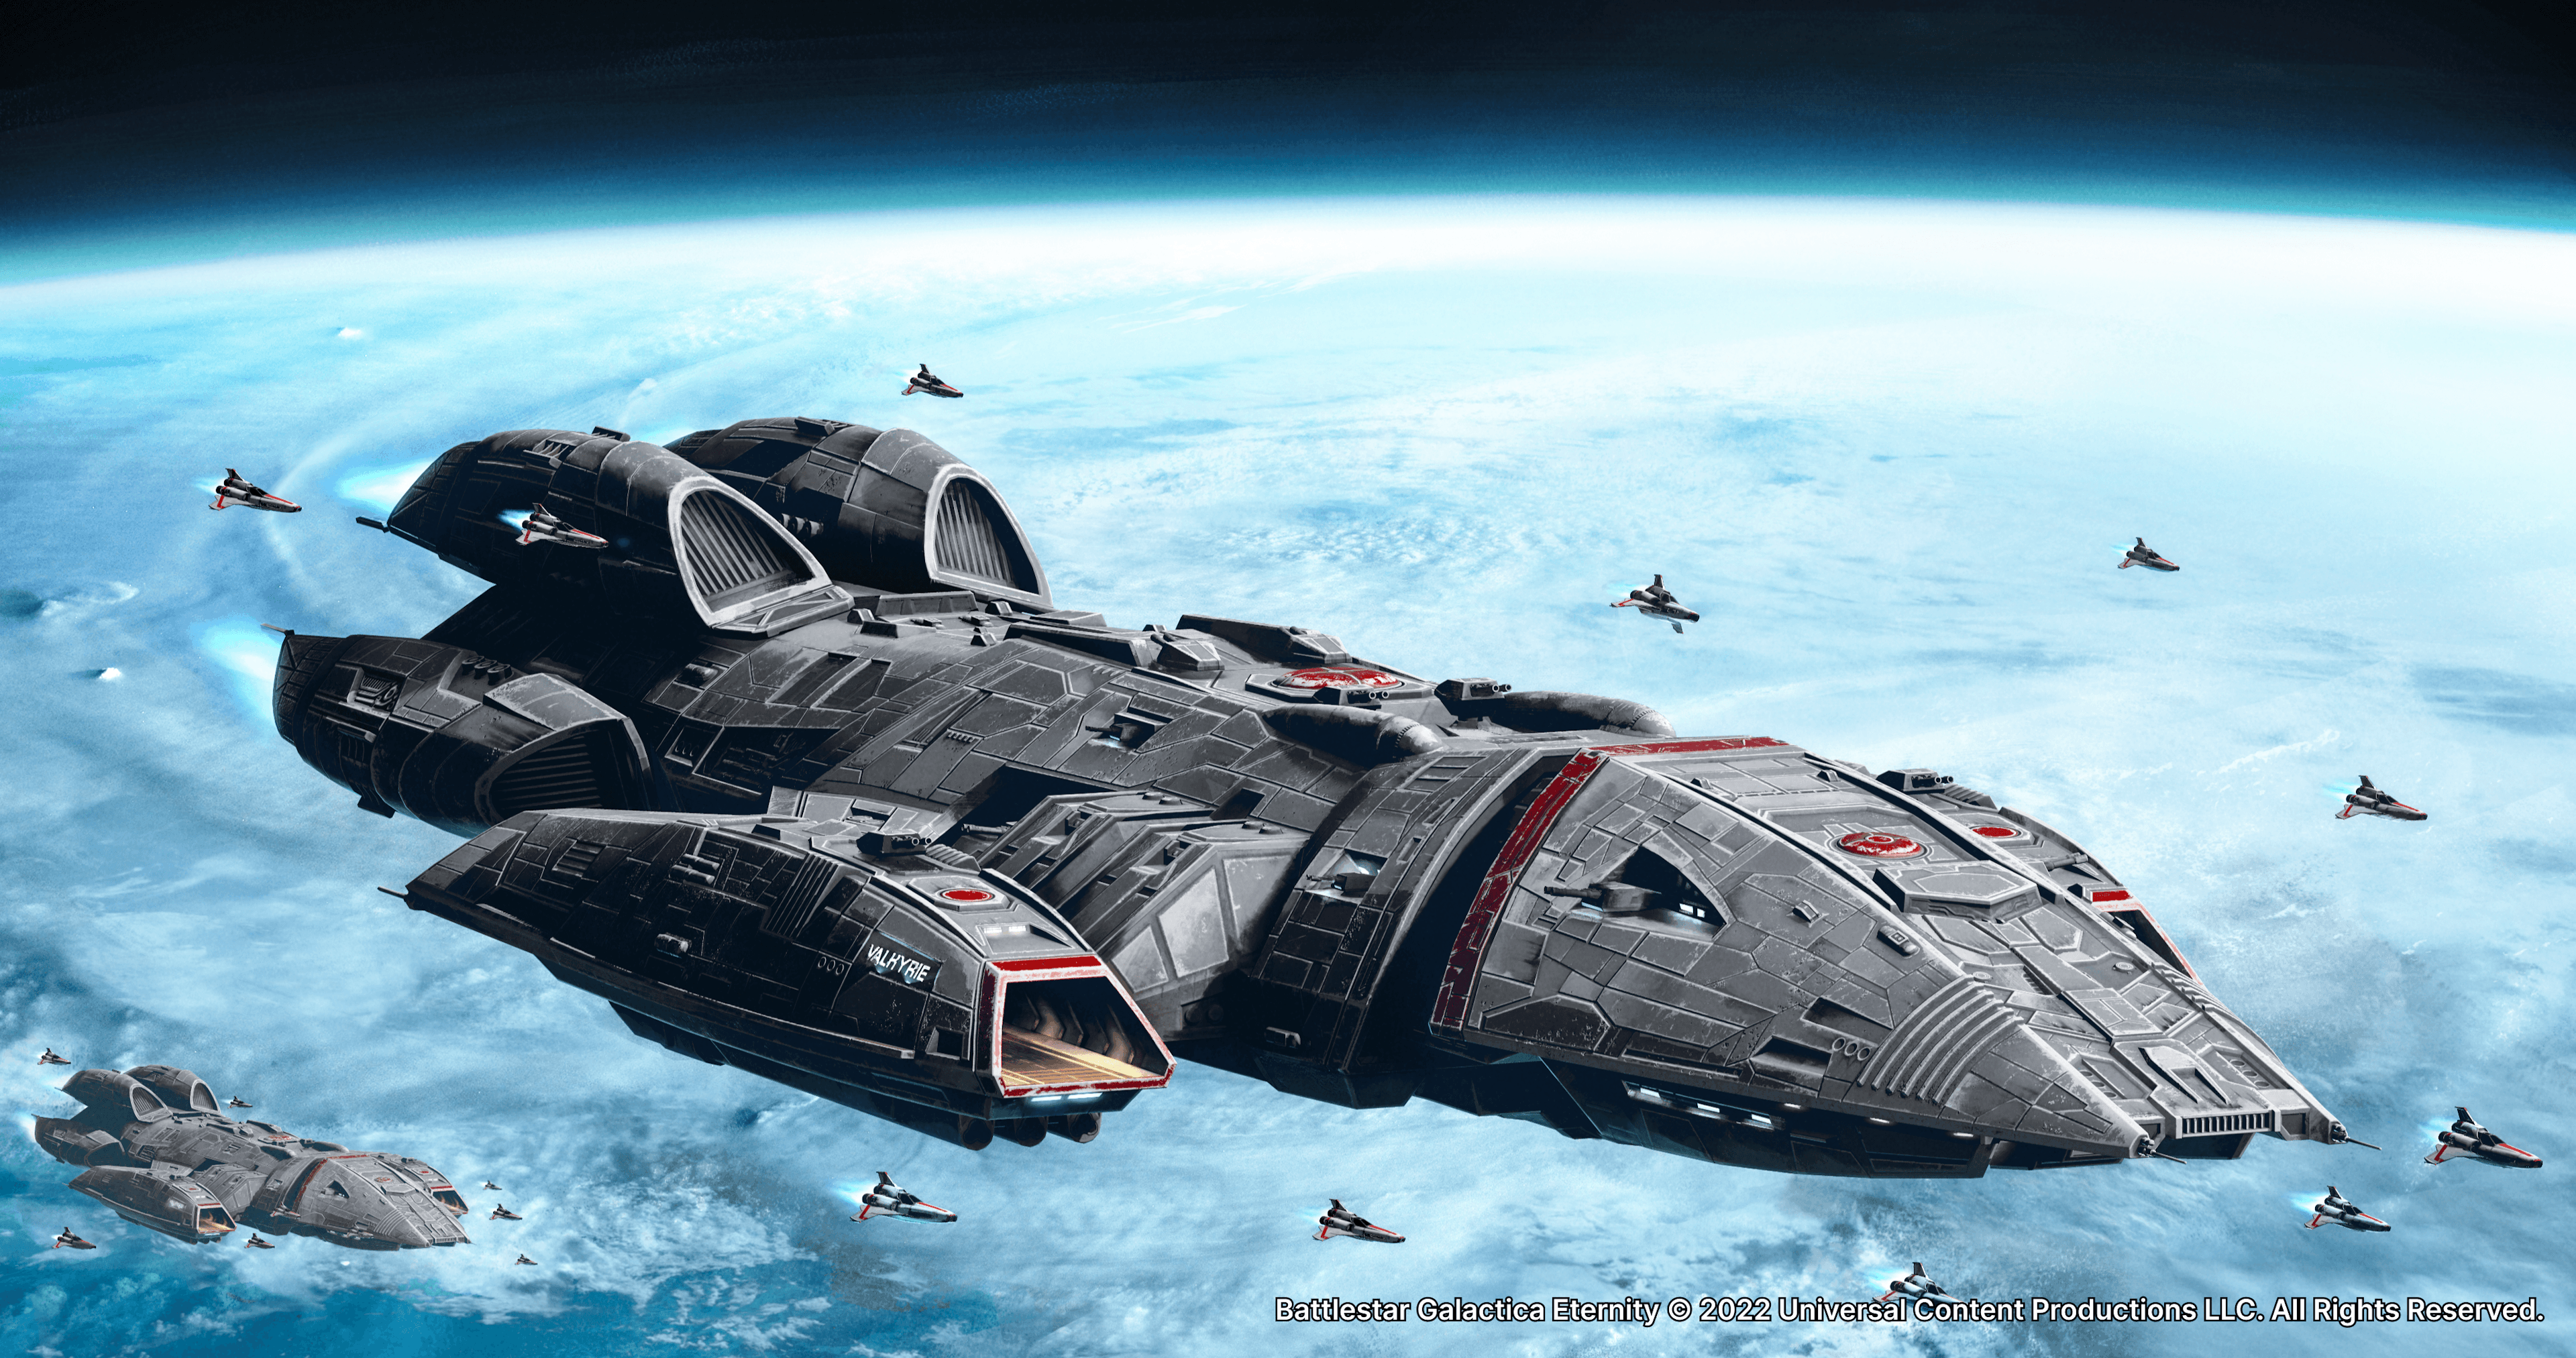 Battlestar Galactica Eternity game image 3.png